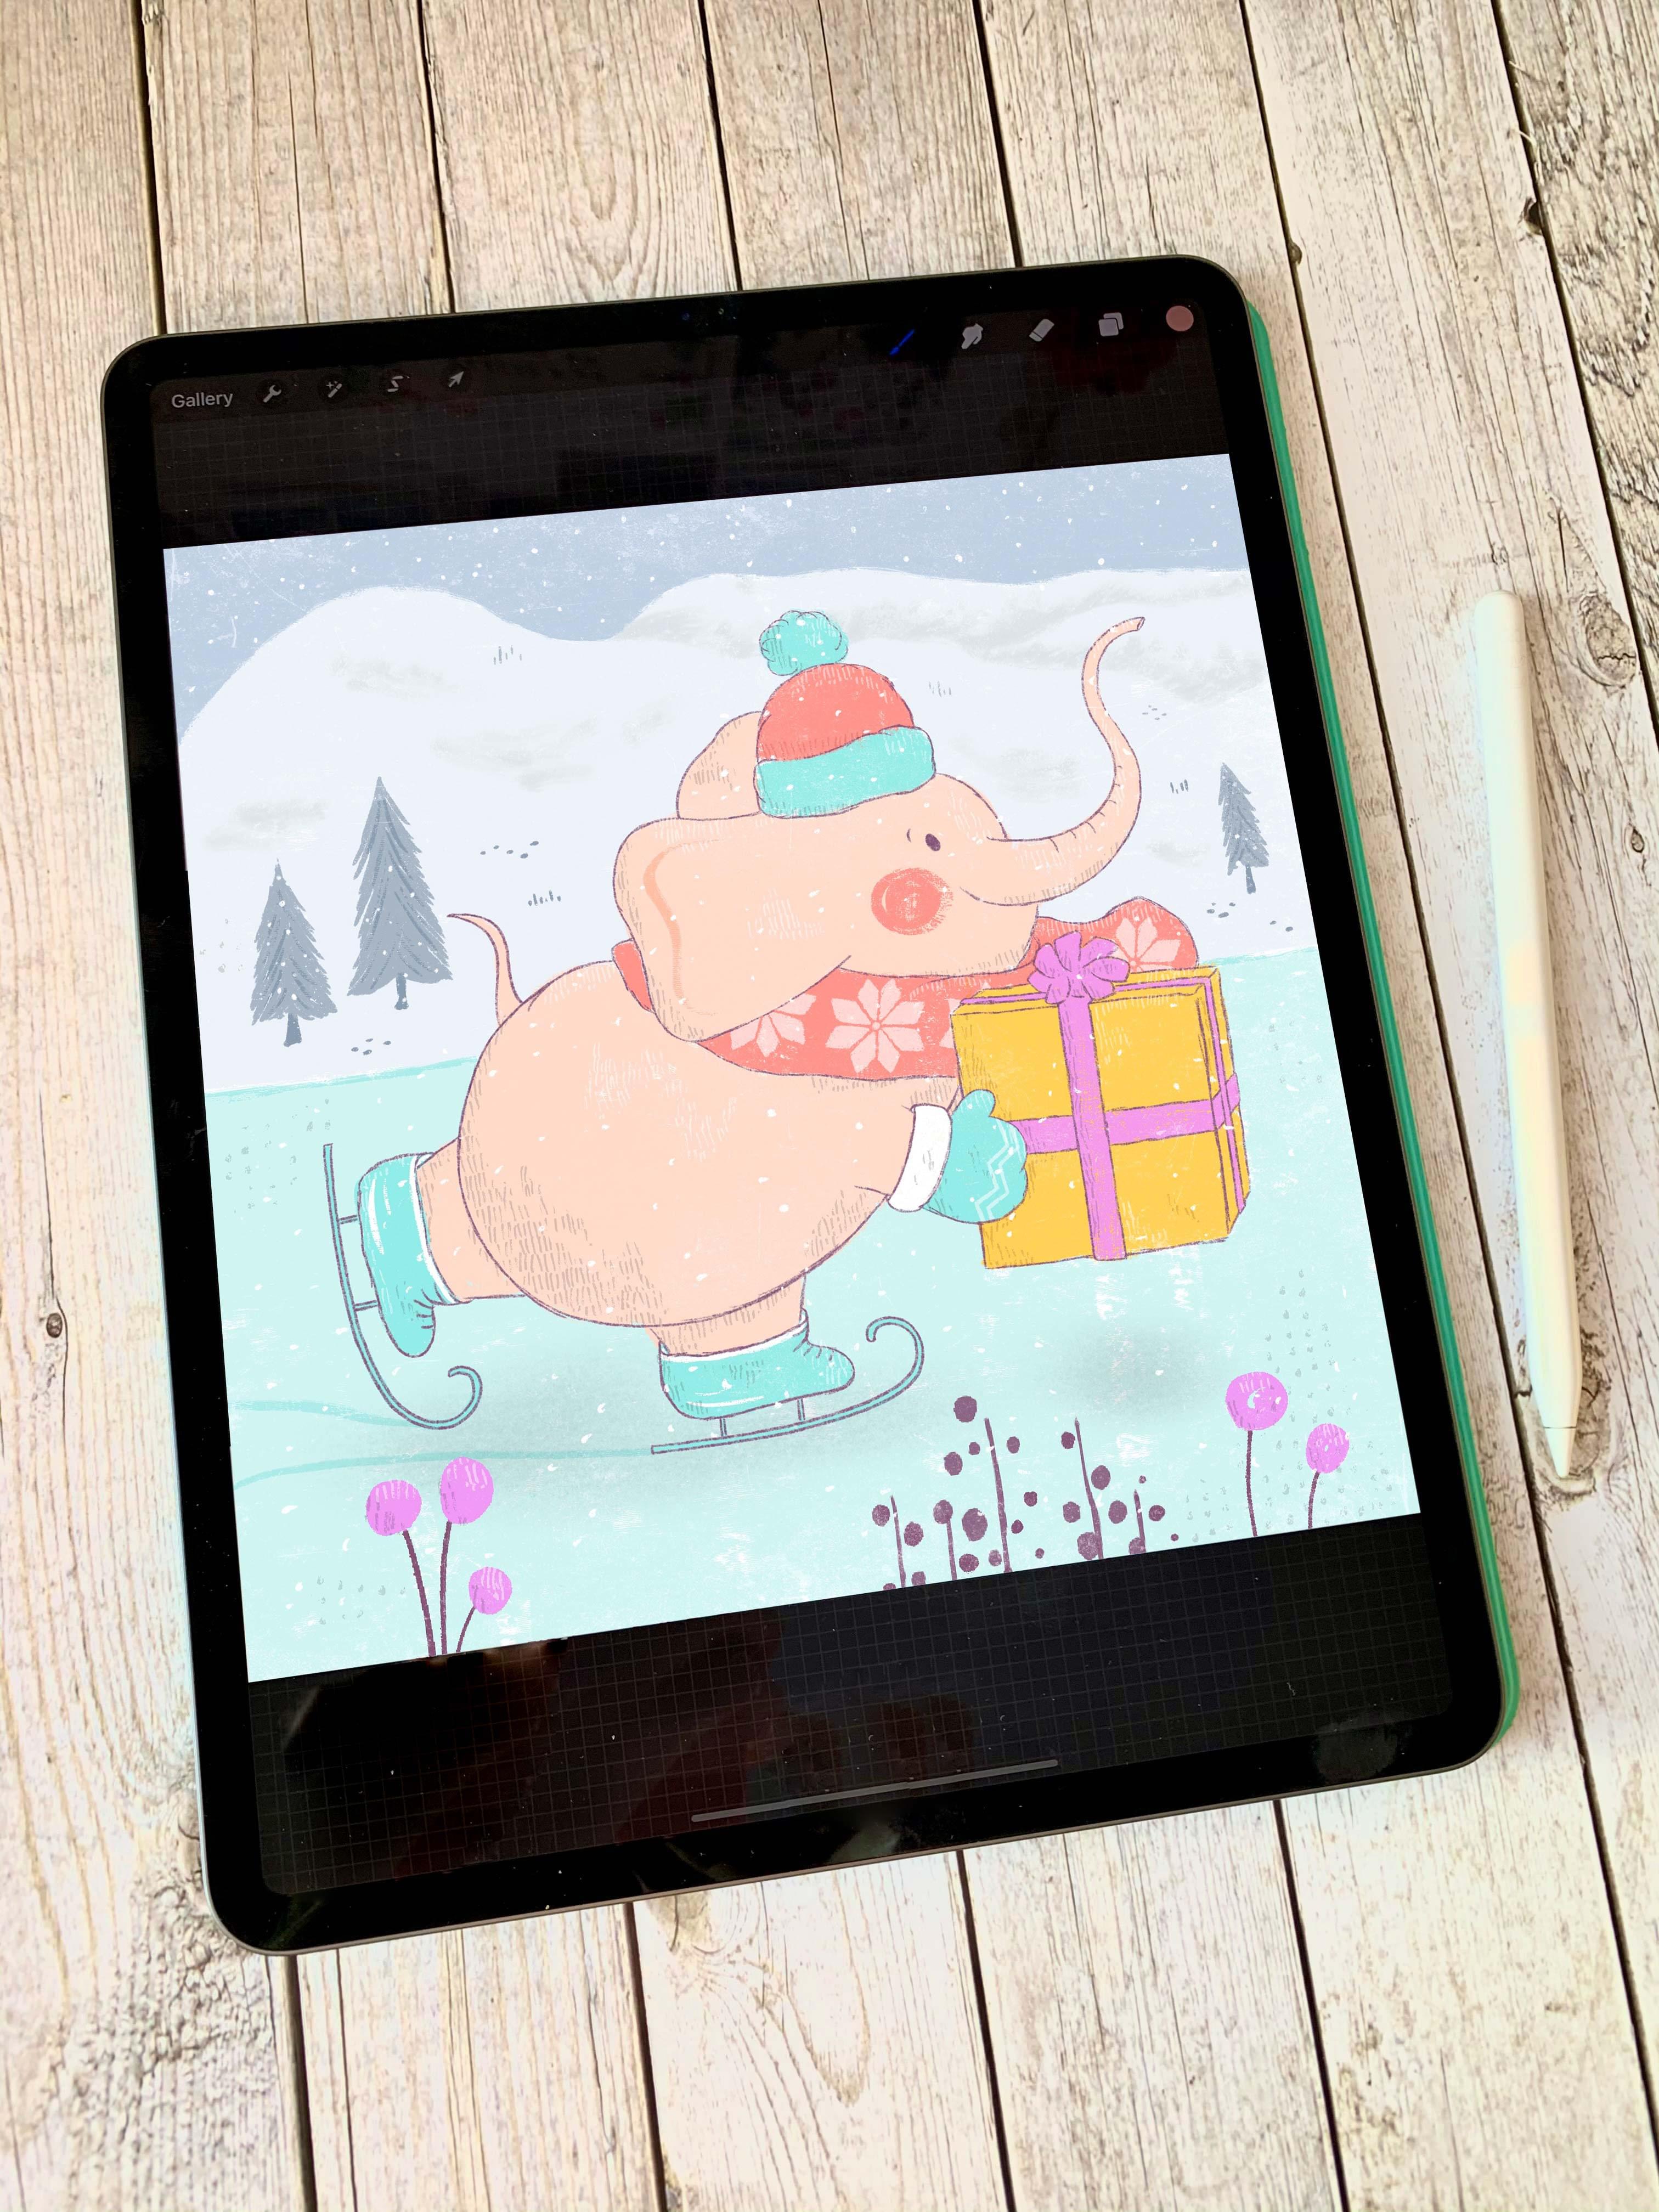 HHristova - Finished winter illustration on the tablet on a wood surface